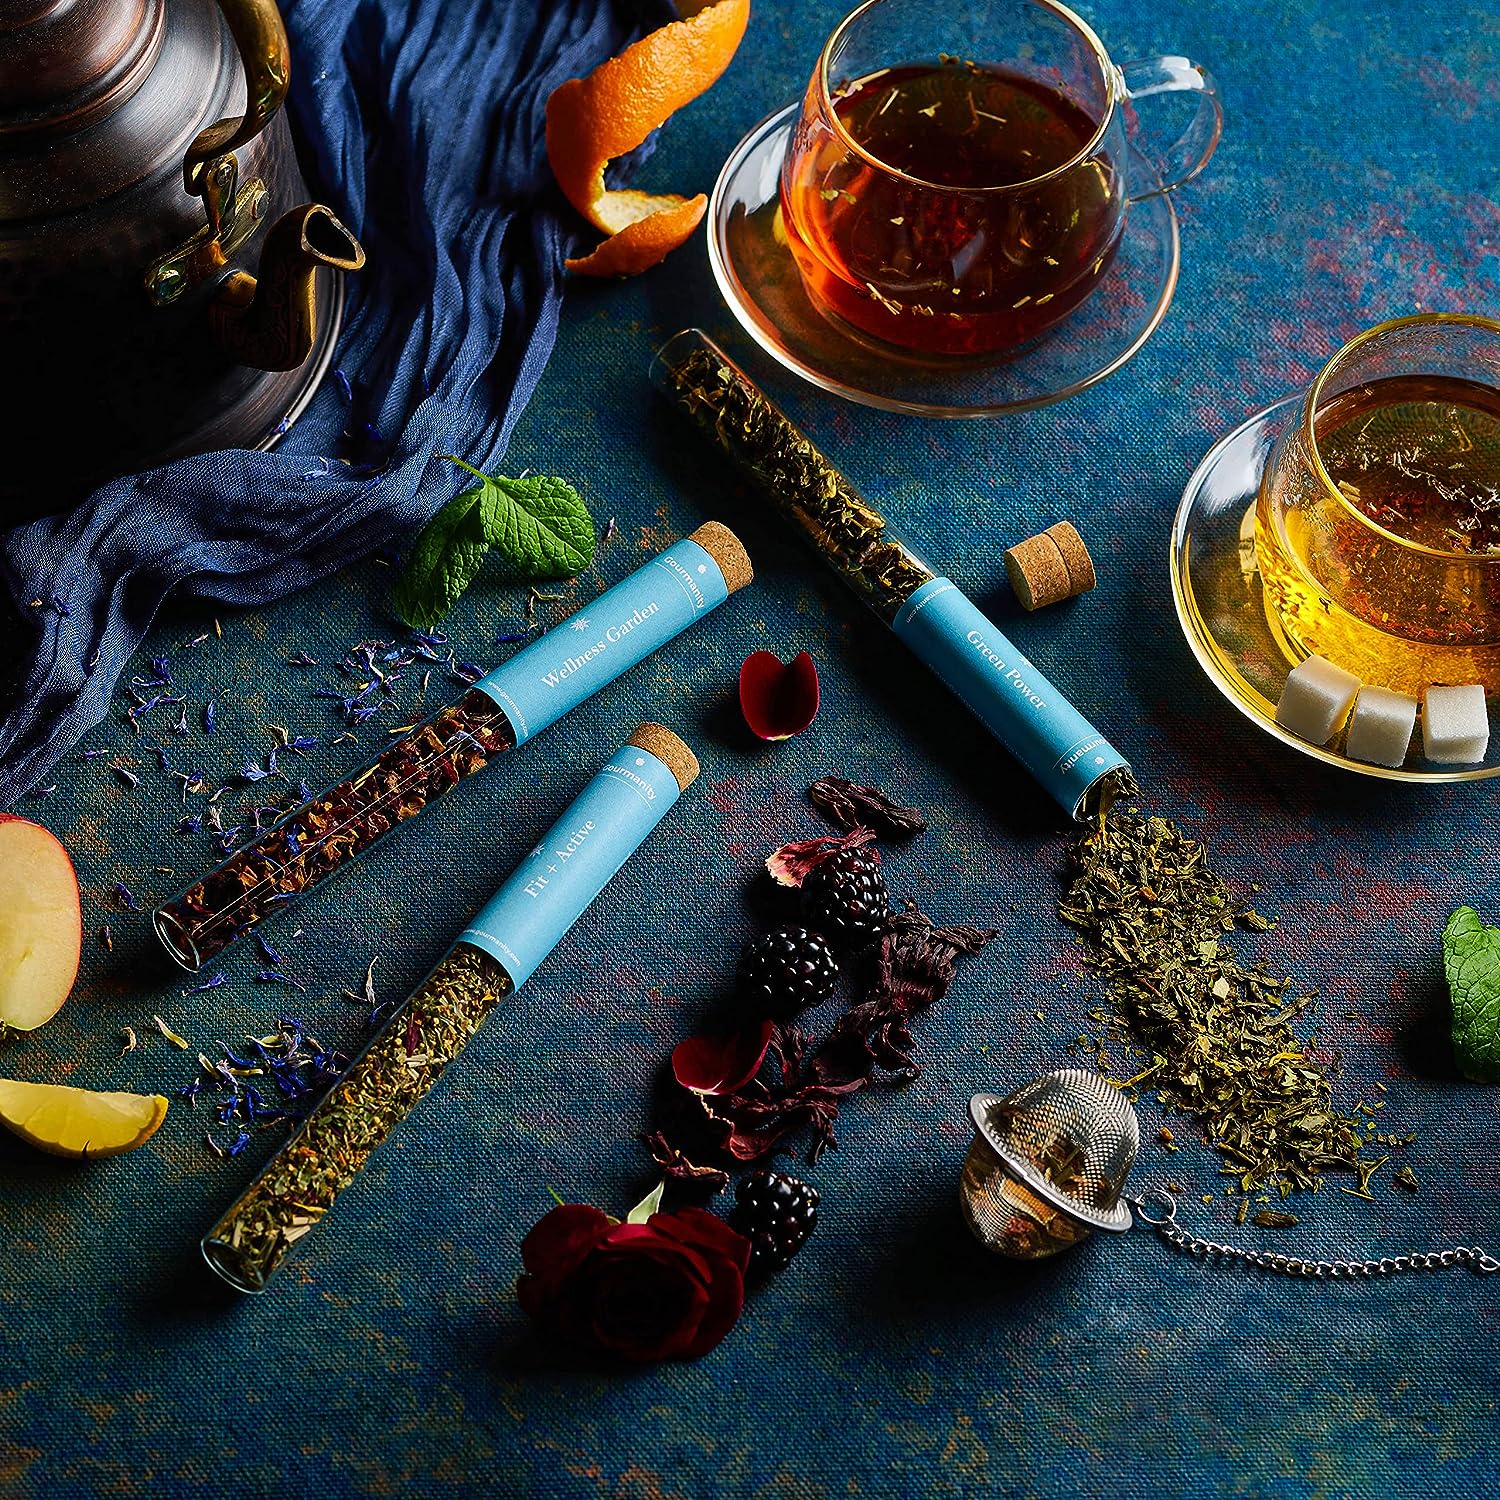 Gourmanity Tea Sampler Gift Set Energy Tea Mix 3 Flavors 0.85oz - Gourmanity